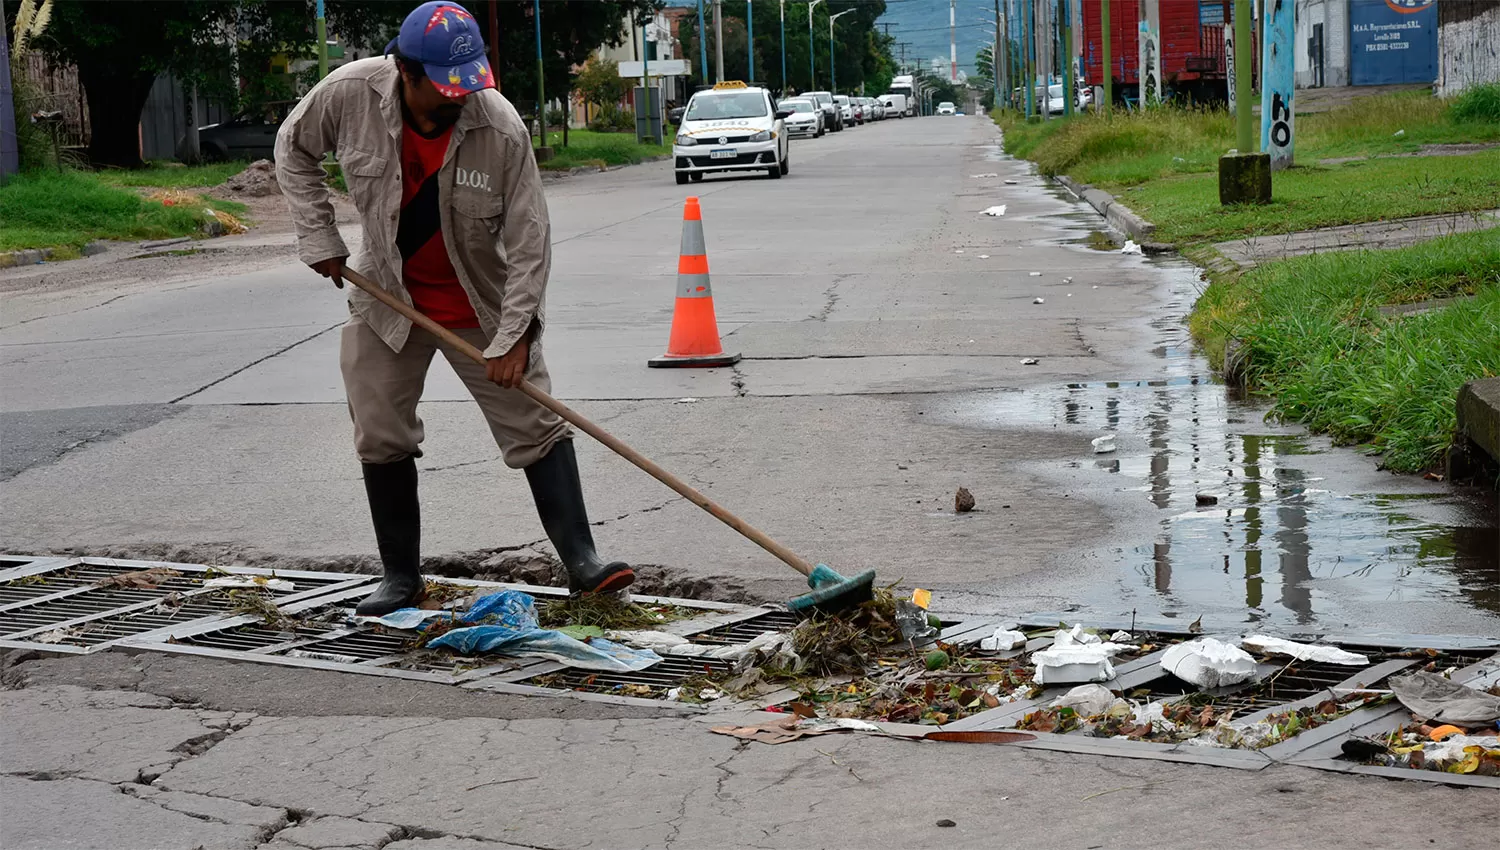 Después de la tormenta, limpian los imbornales de las calles en la capital